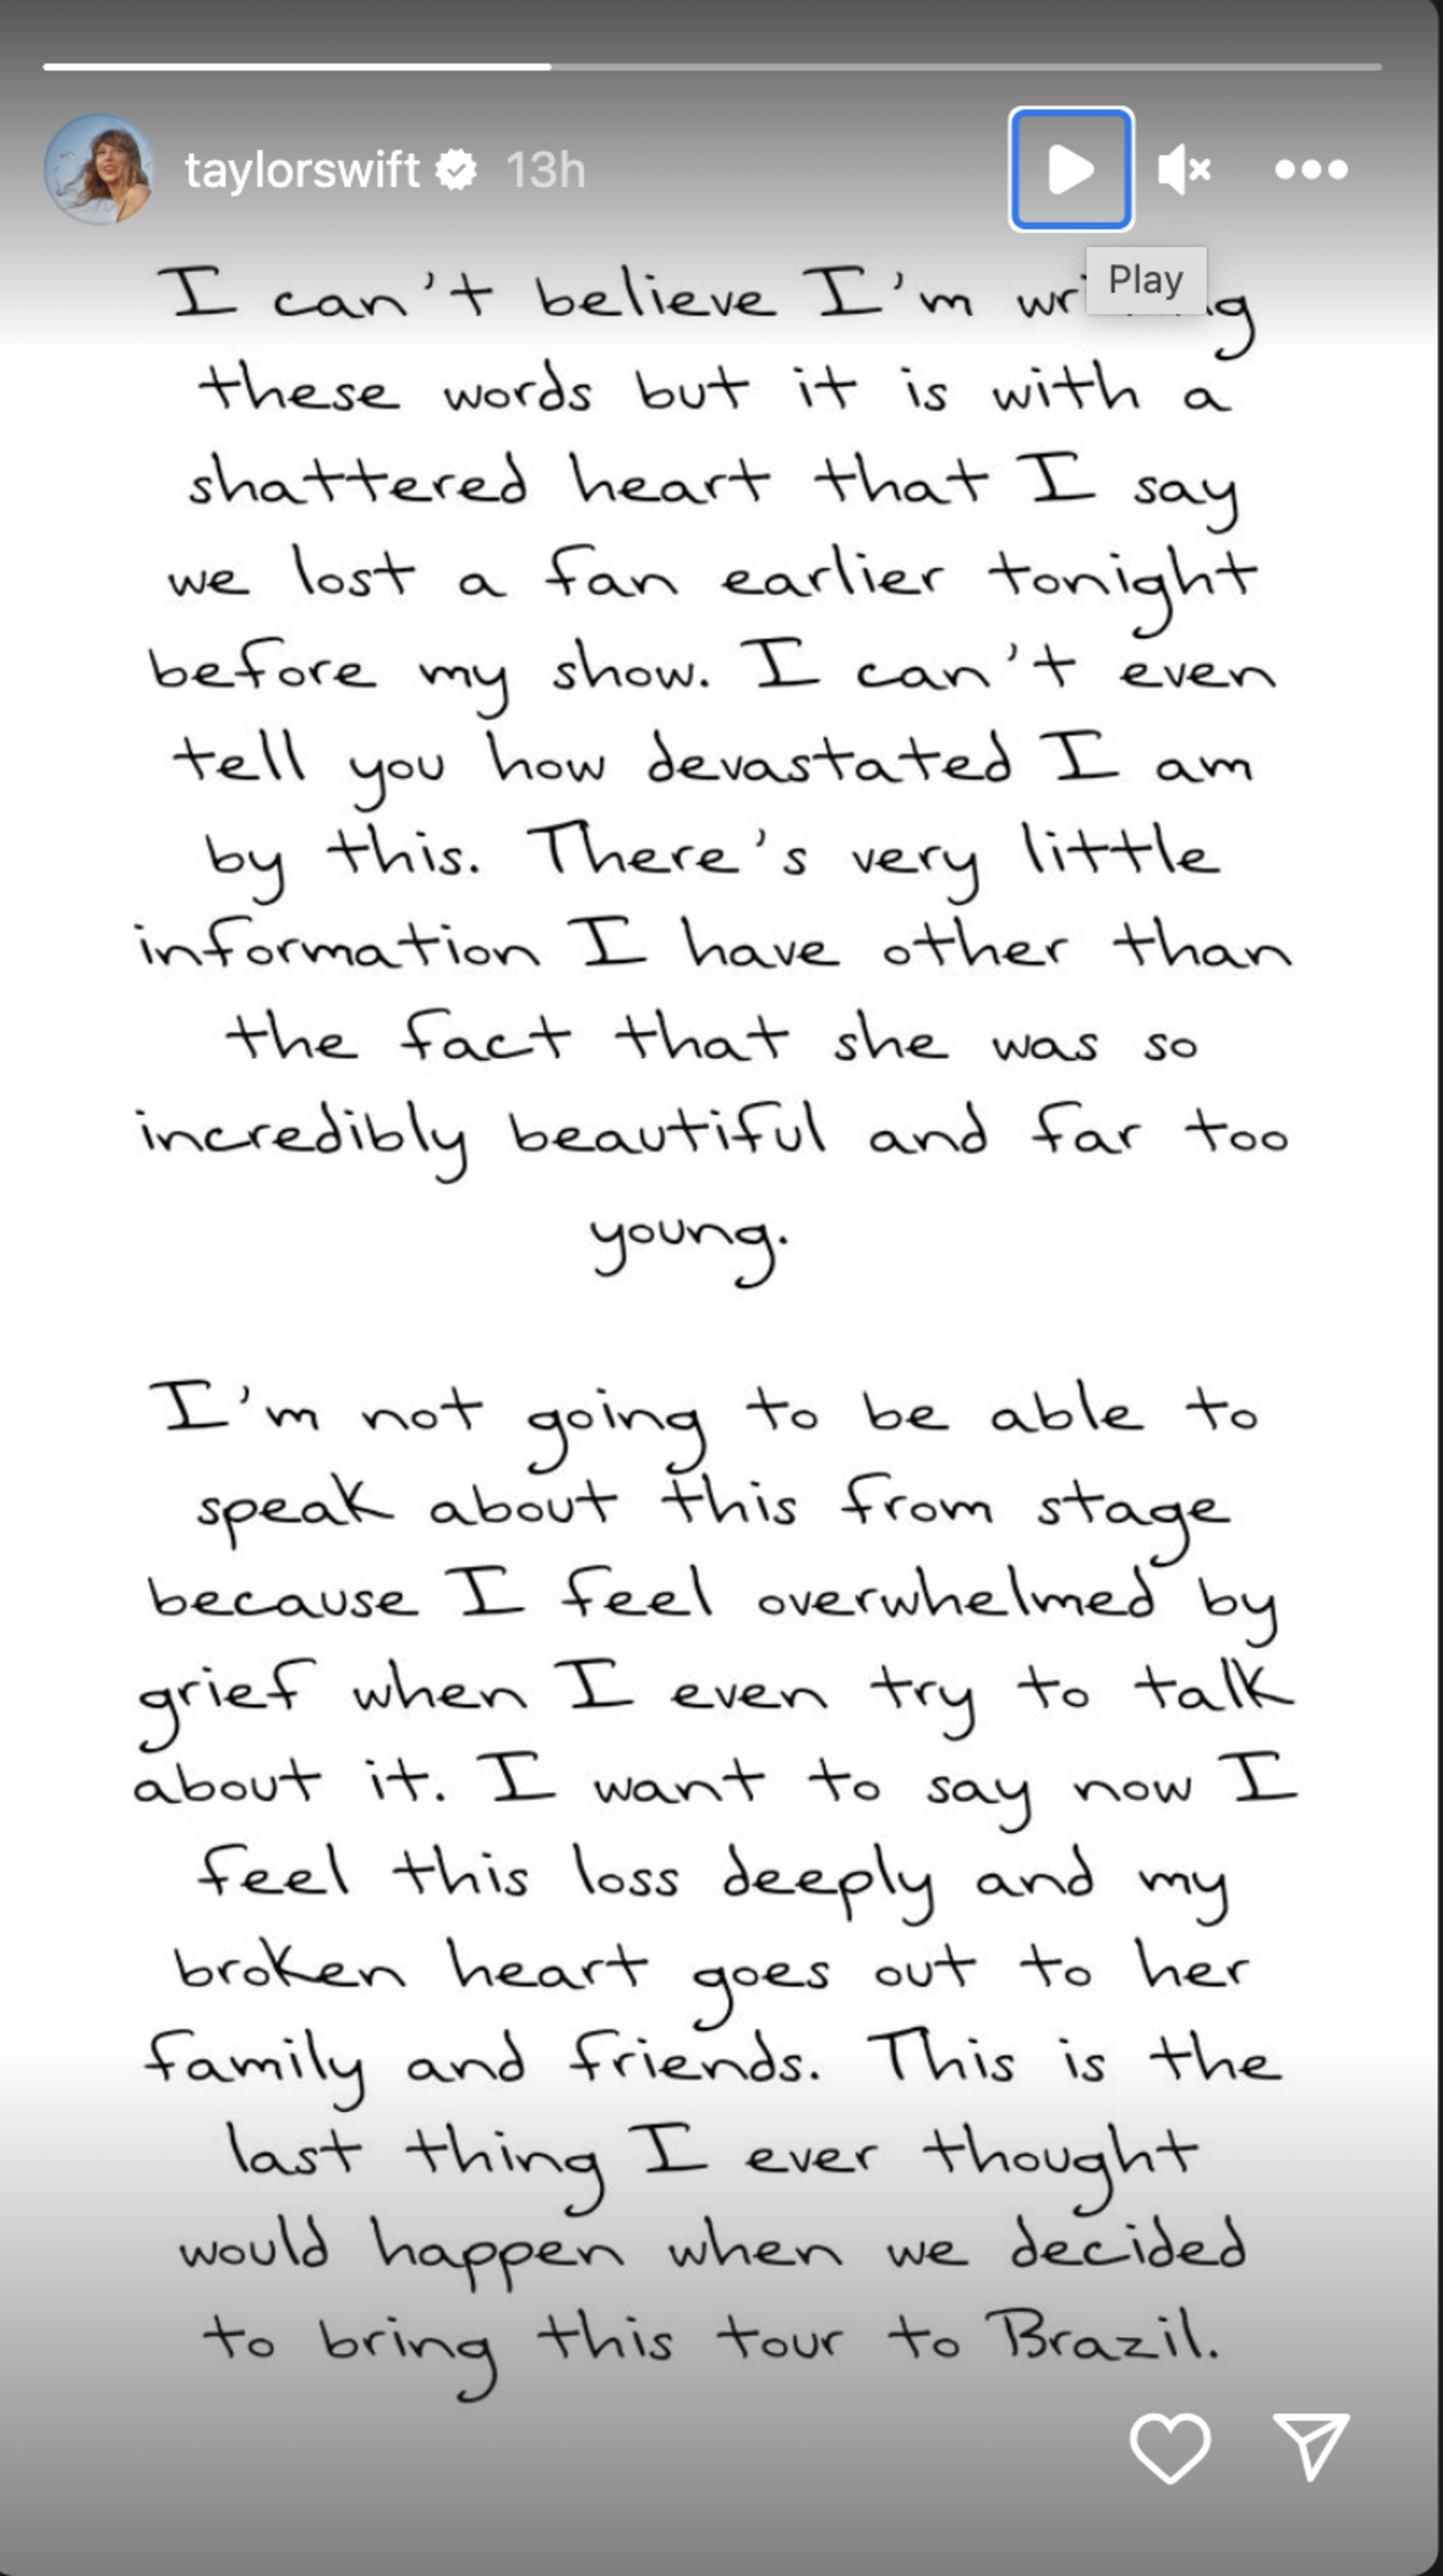 Taylor Swift 'Shattered' After Fan Dies At Eras Tour: Read Her Letter ...